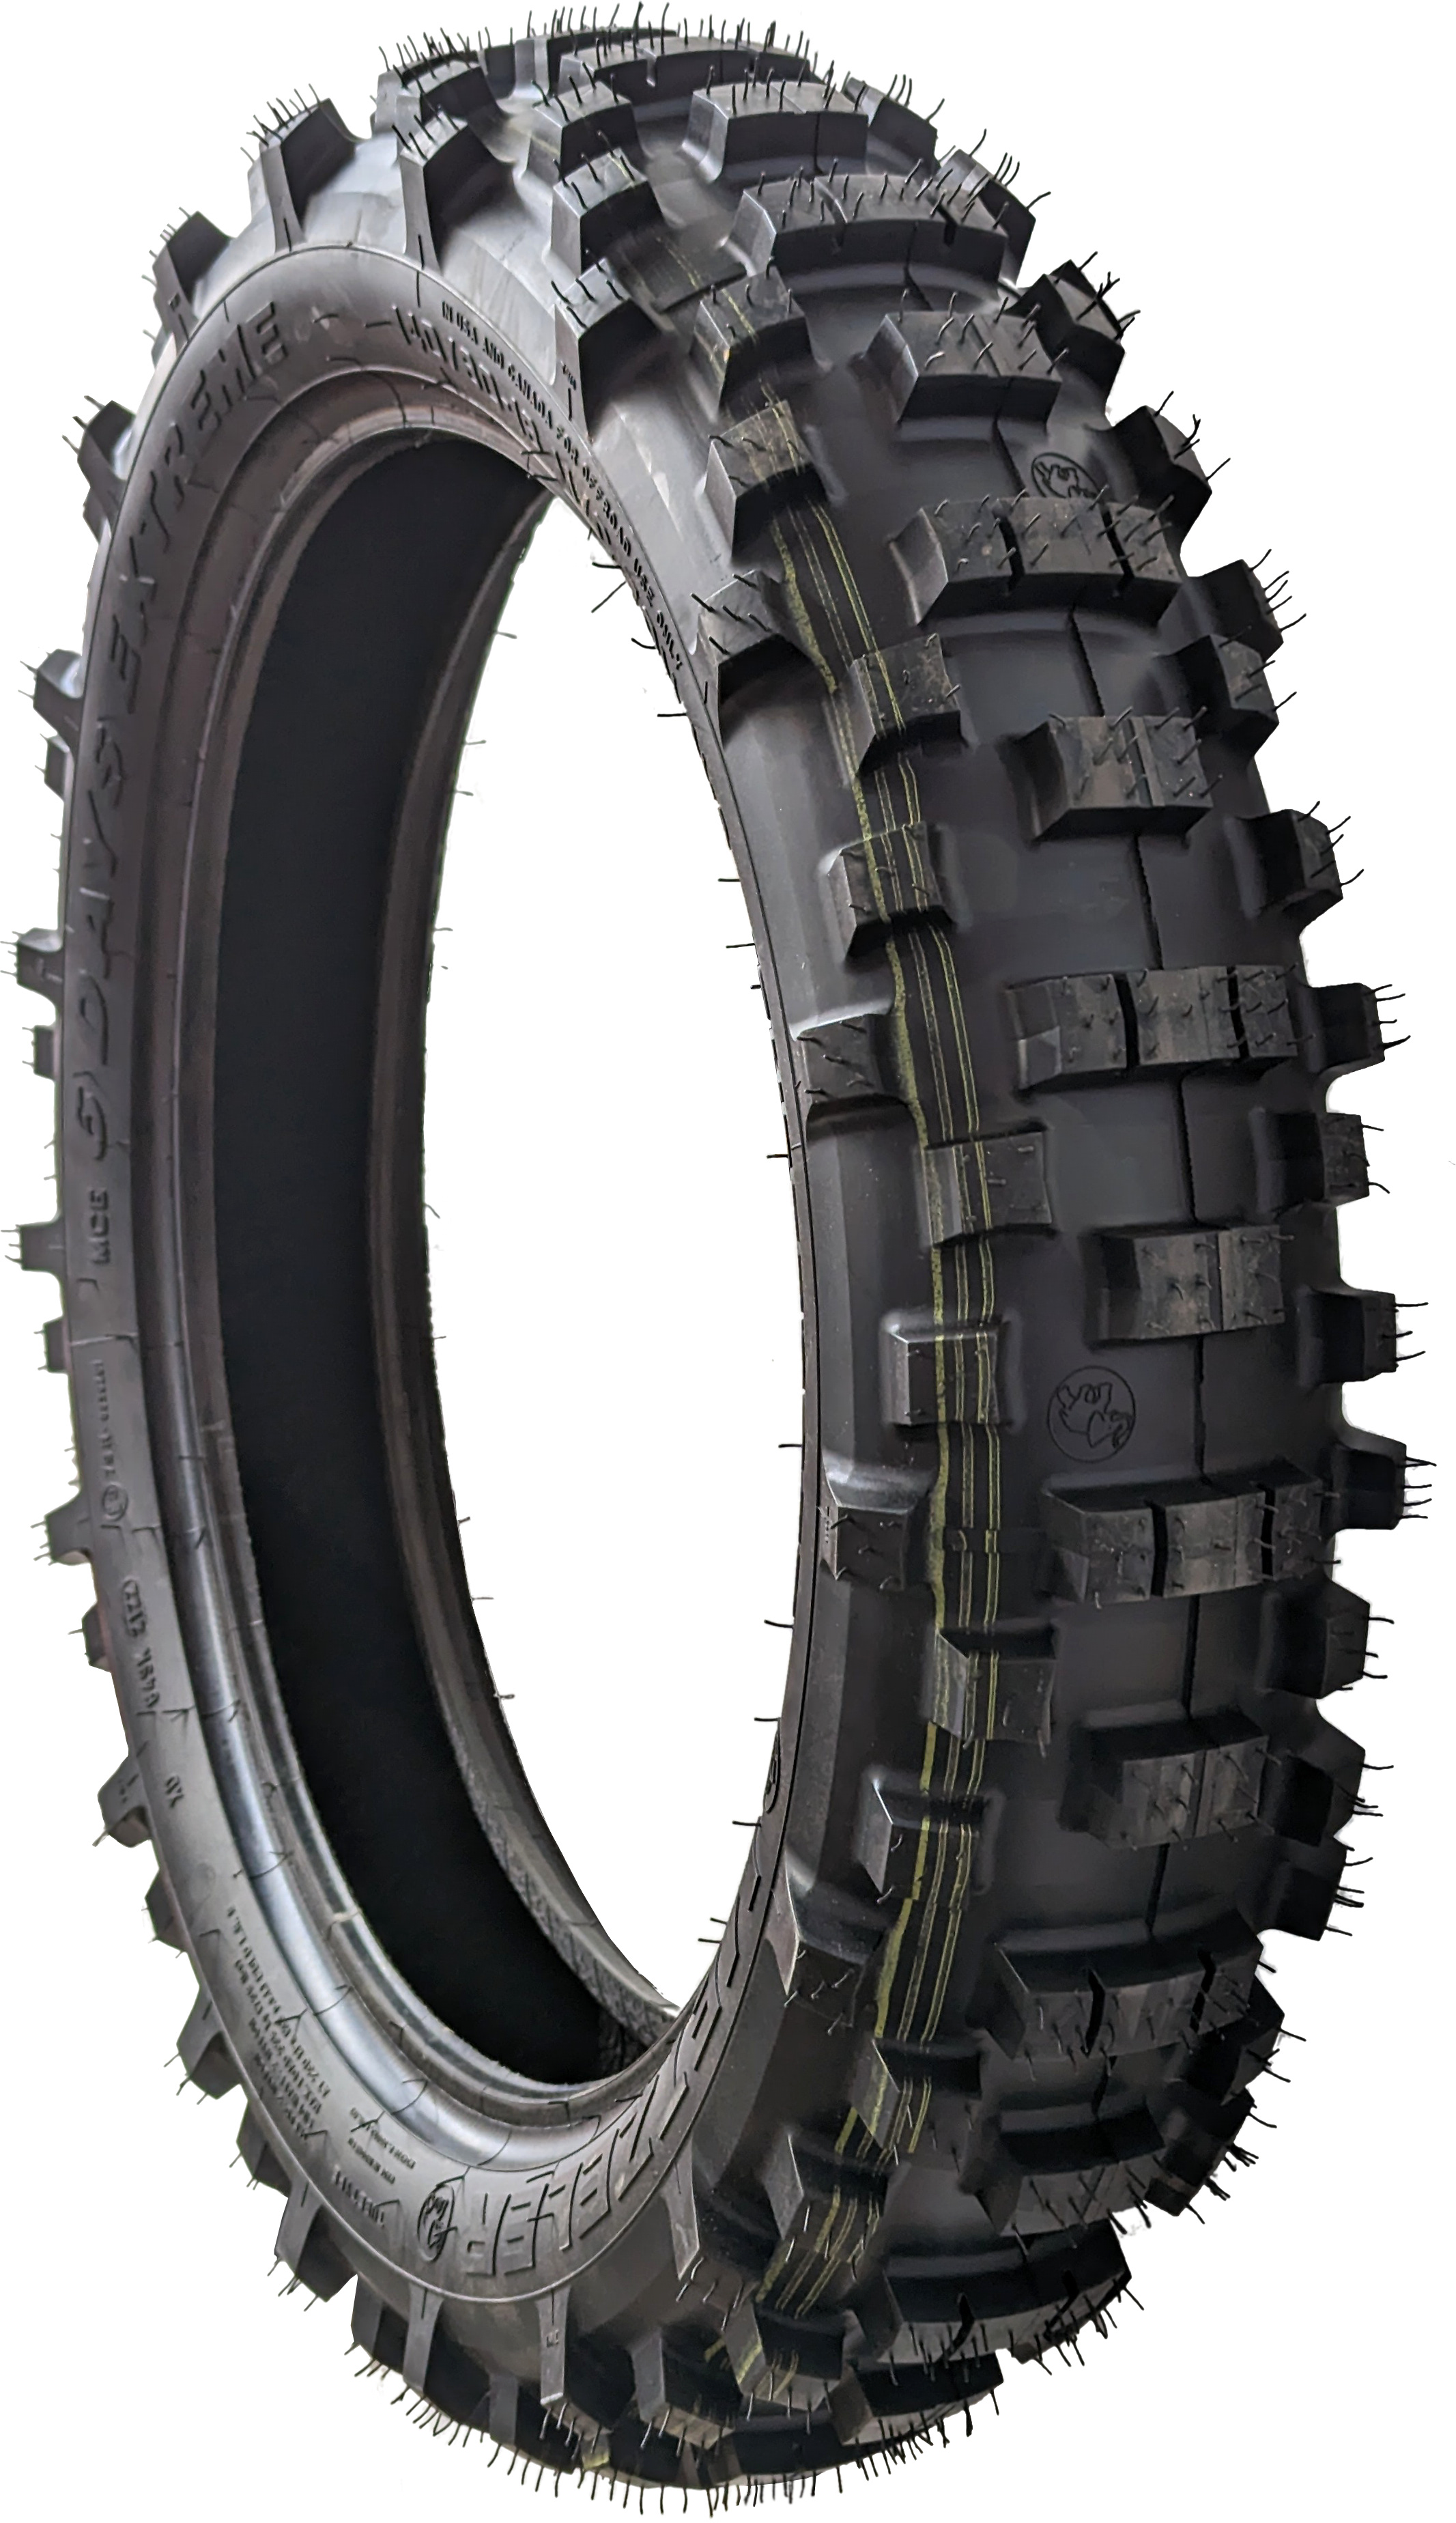 140/80-18 Six Days Extreme Rear Tire - Super Soft - M/C 70M M+S - Click Image to Close